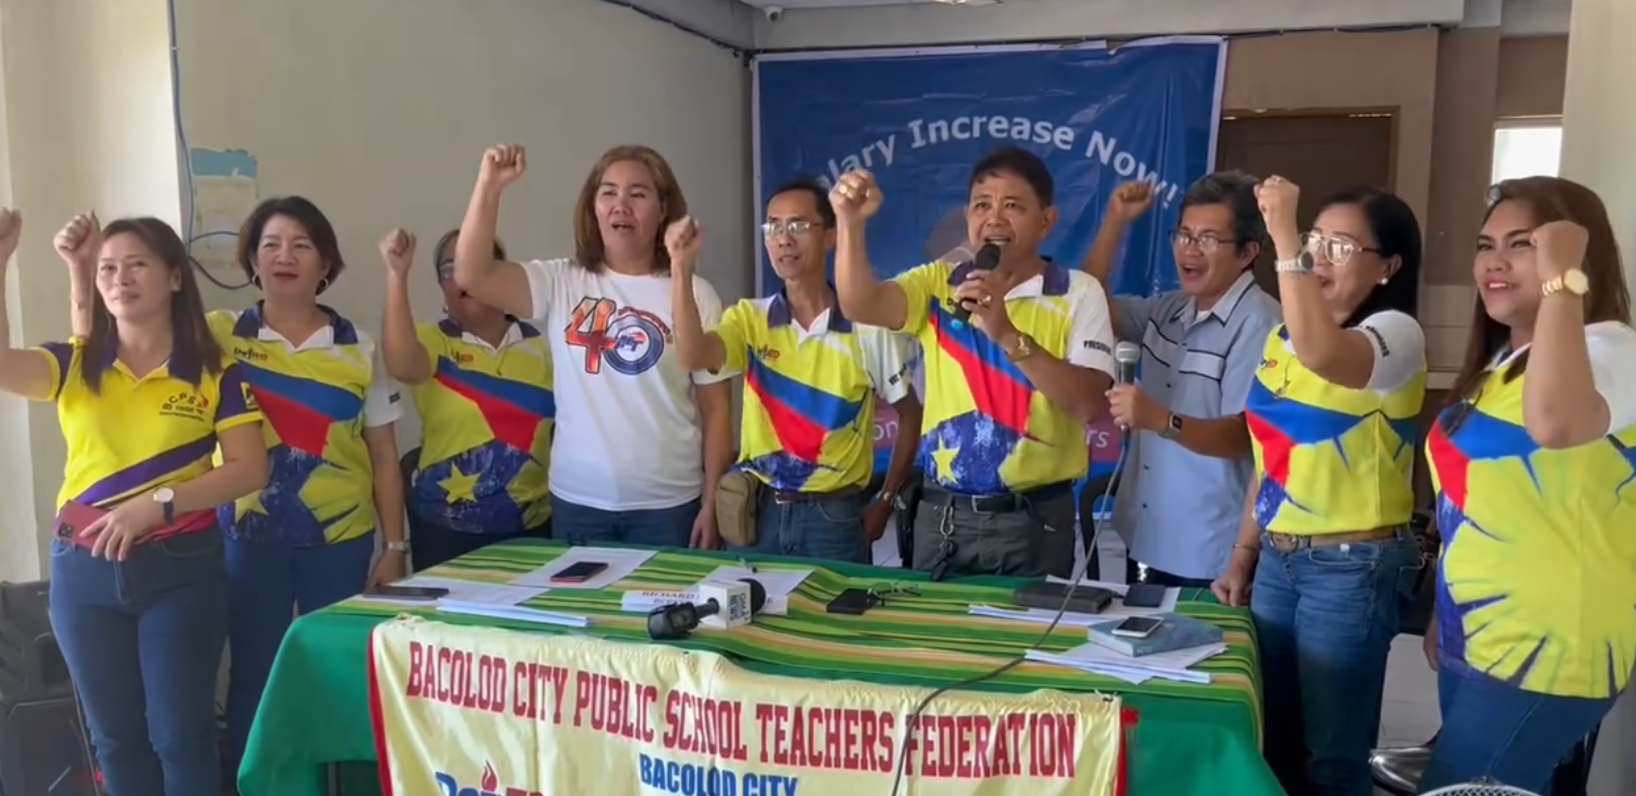 Nine Bacolod City teachers raising their fist in demand to increase salary.